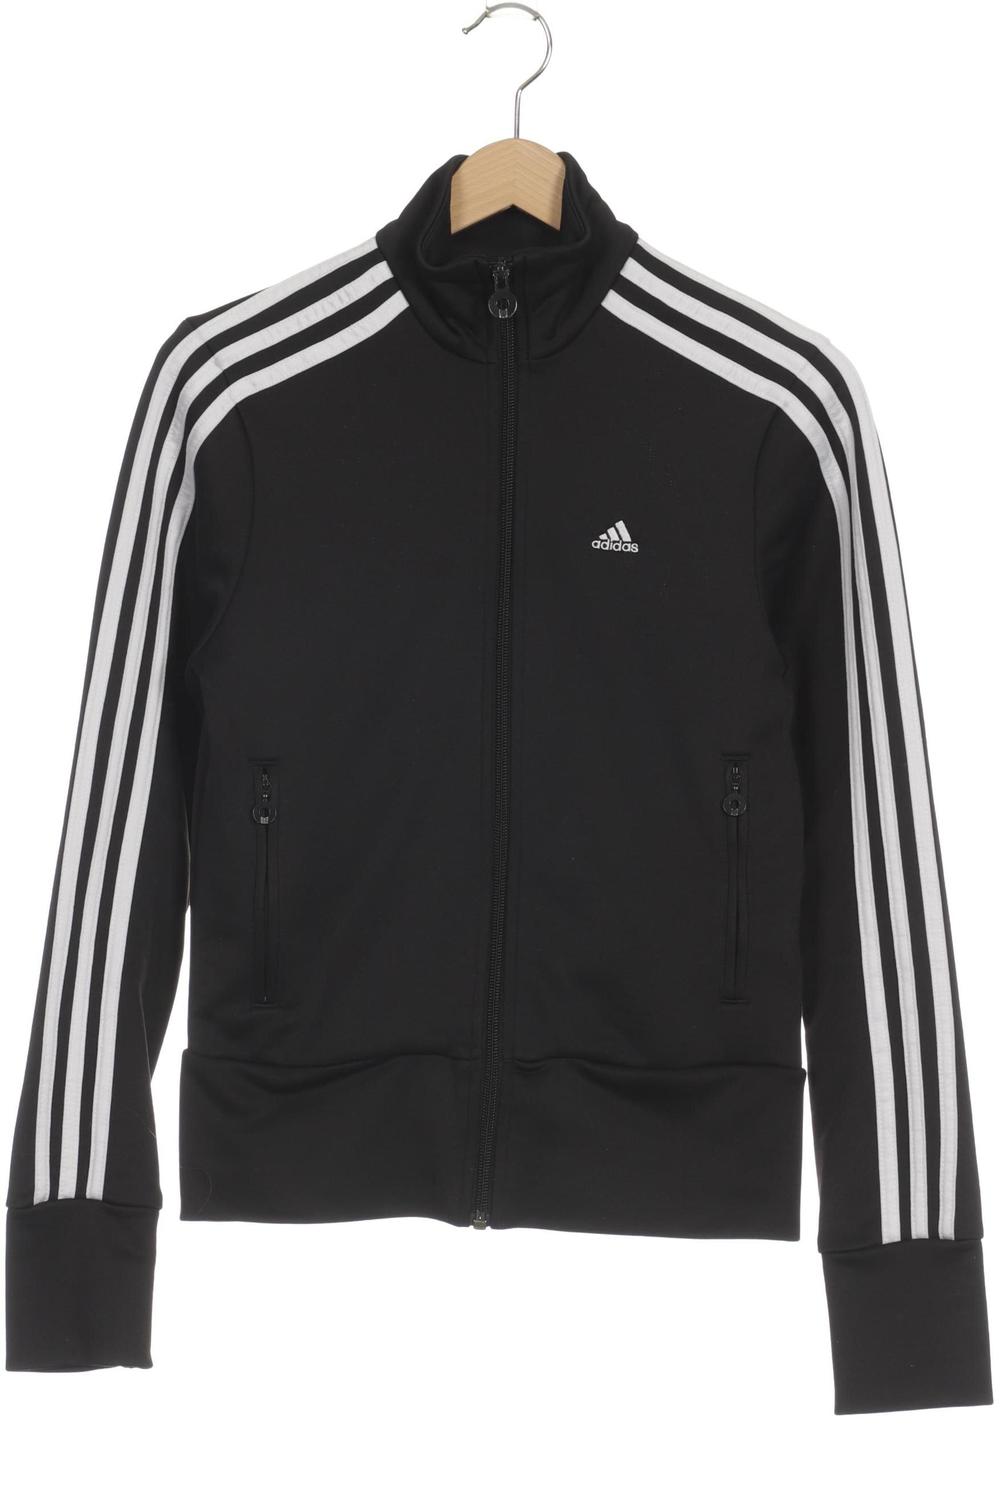 Adidas Jacke Damen Mantel Gr. DE 34 schwarz #ccacde7 | eBay